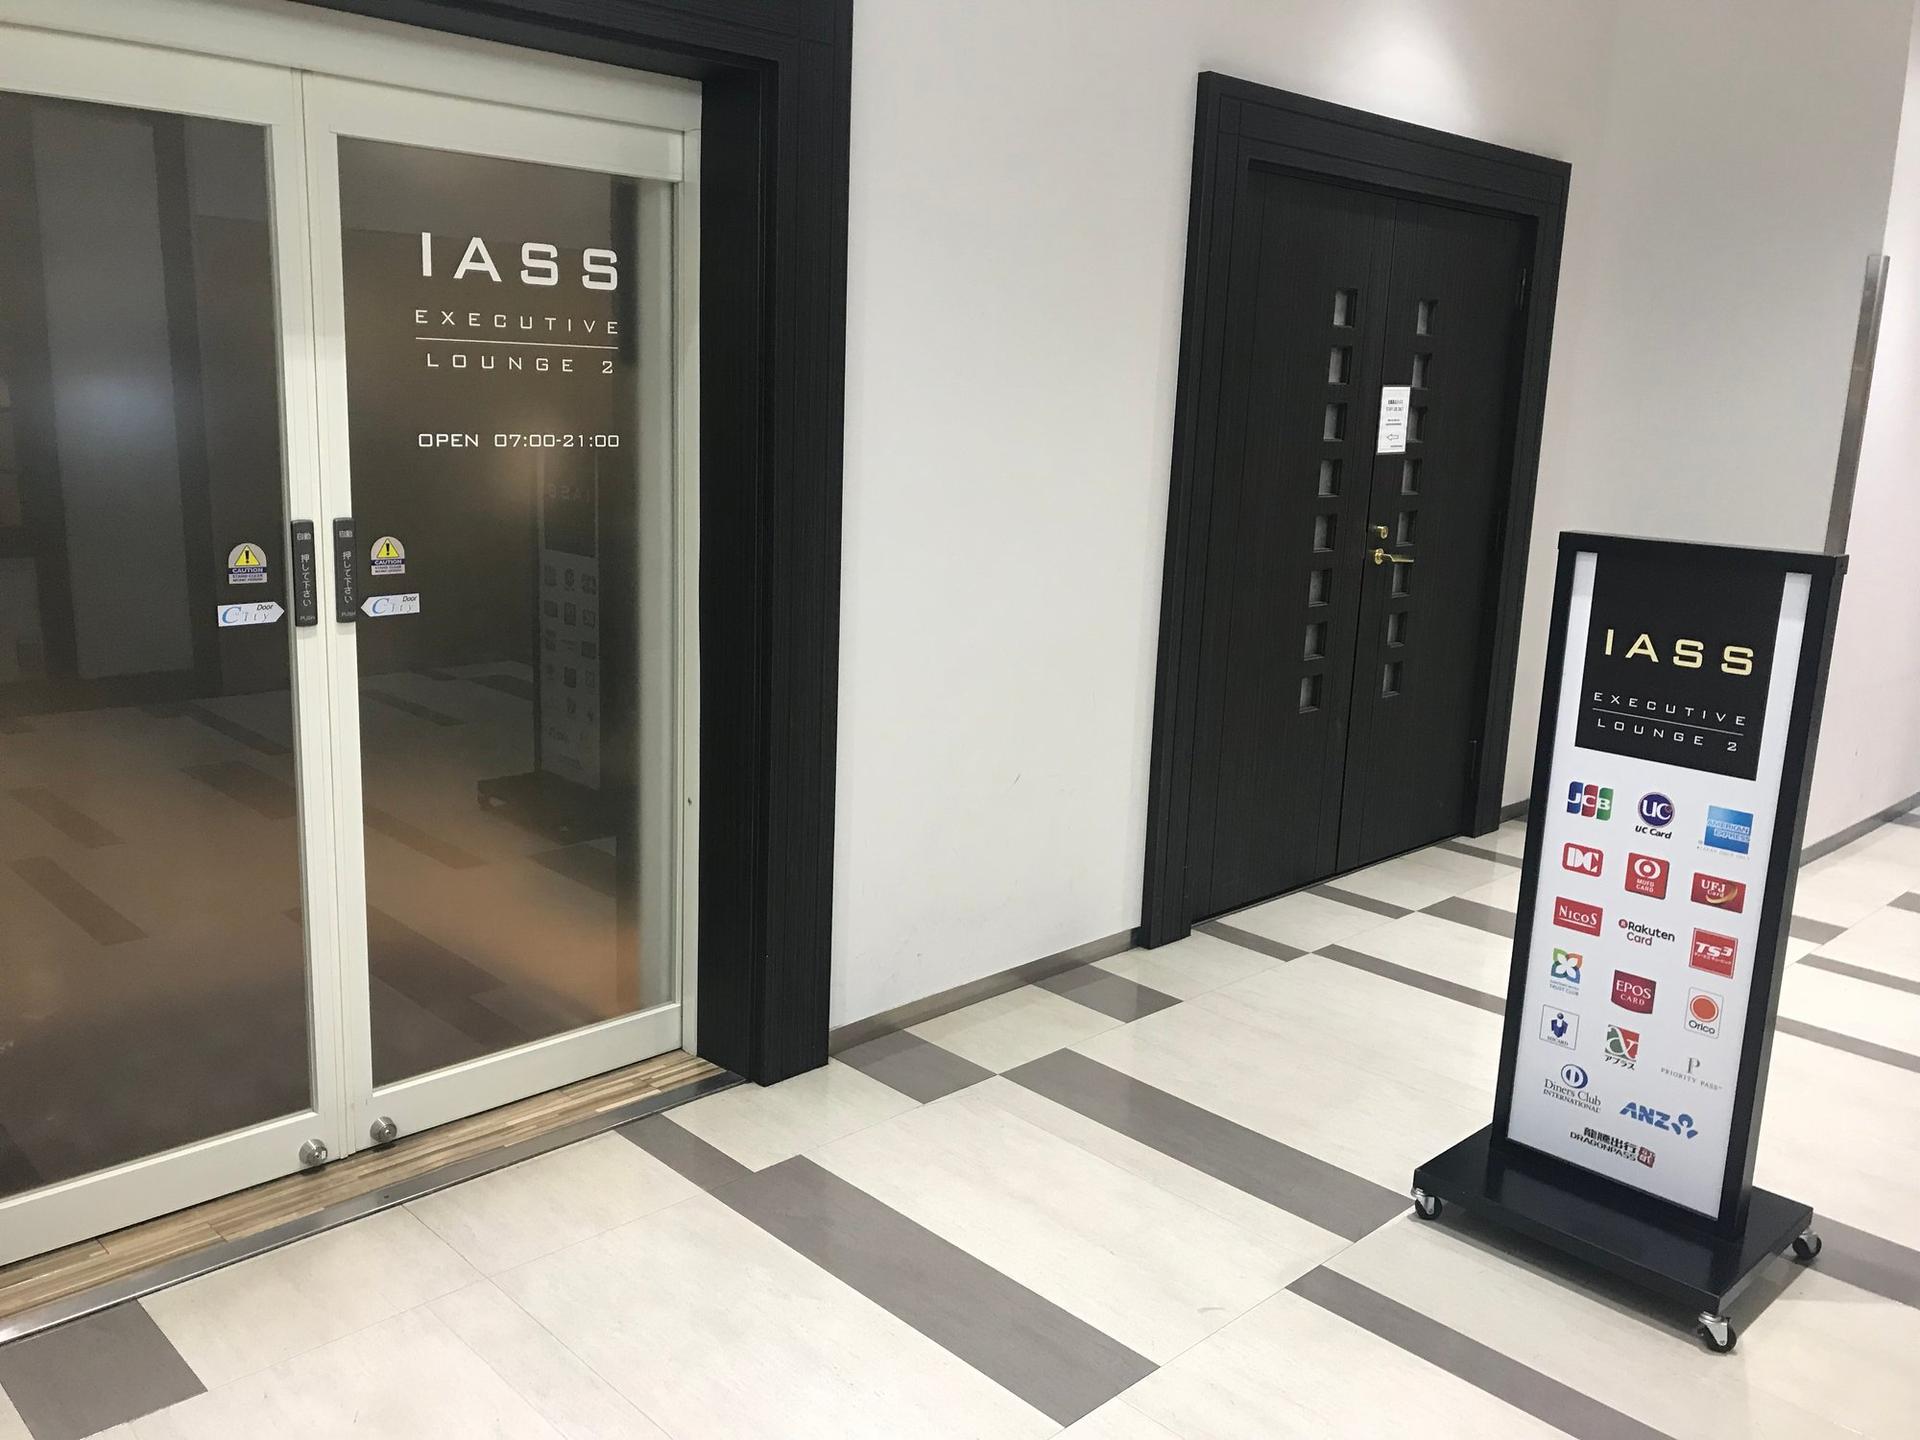 IASS Executive Lounge image 11 of 16